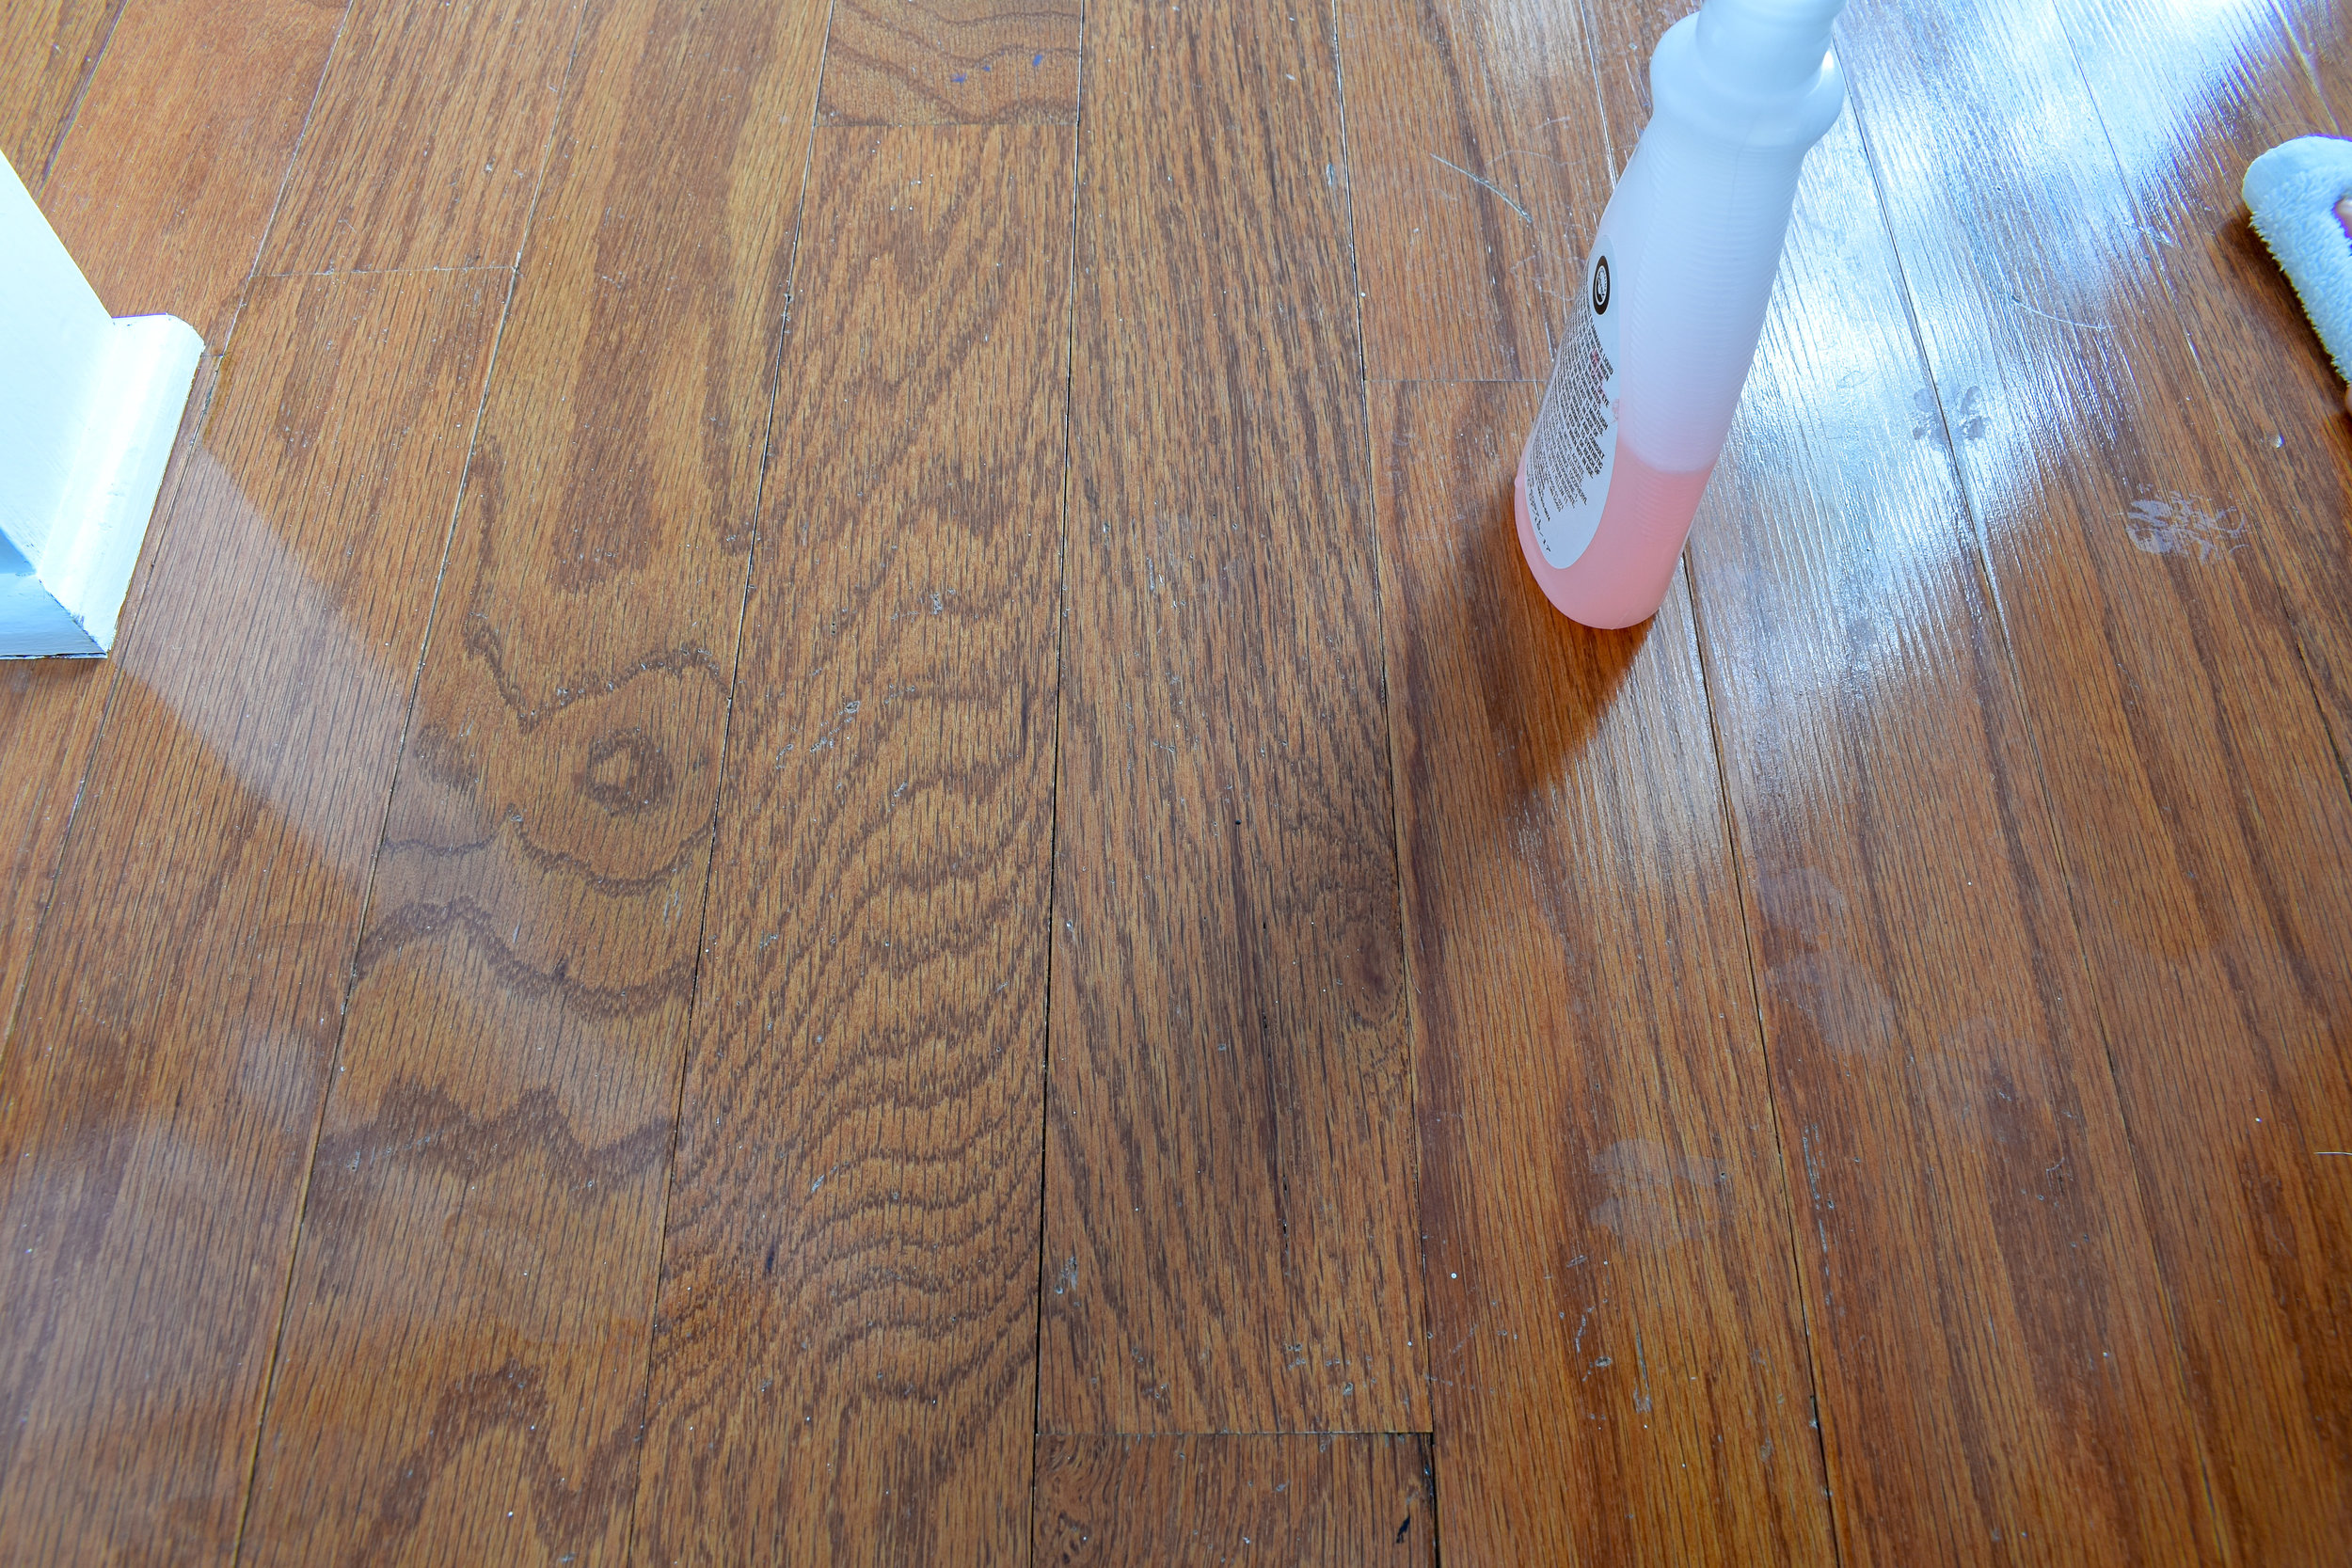 How To Make Old Hardwood Floors Shine, How To Put Shine On Hardwood Floors